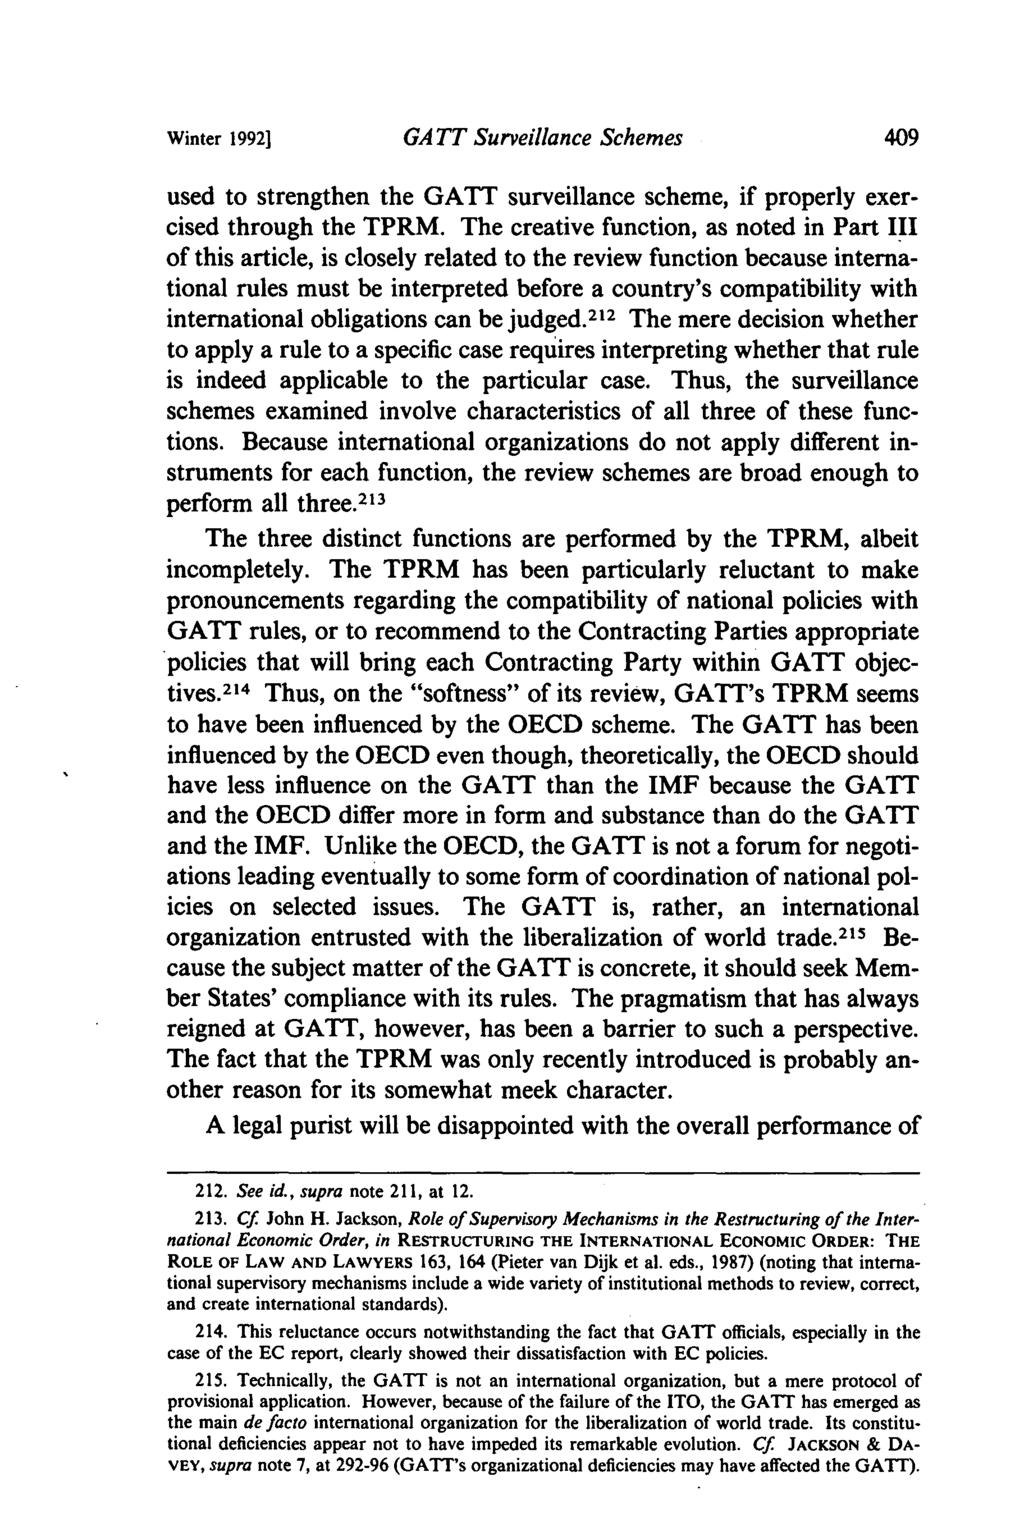 Winter 19921 GA TT Surveillance Schemes used to strengthen the GATT surveillance scheme, if properly exercised through the TPRM.